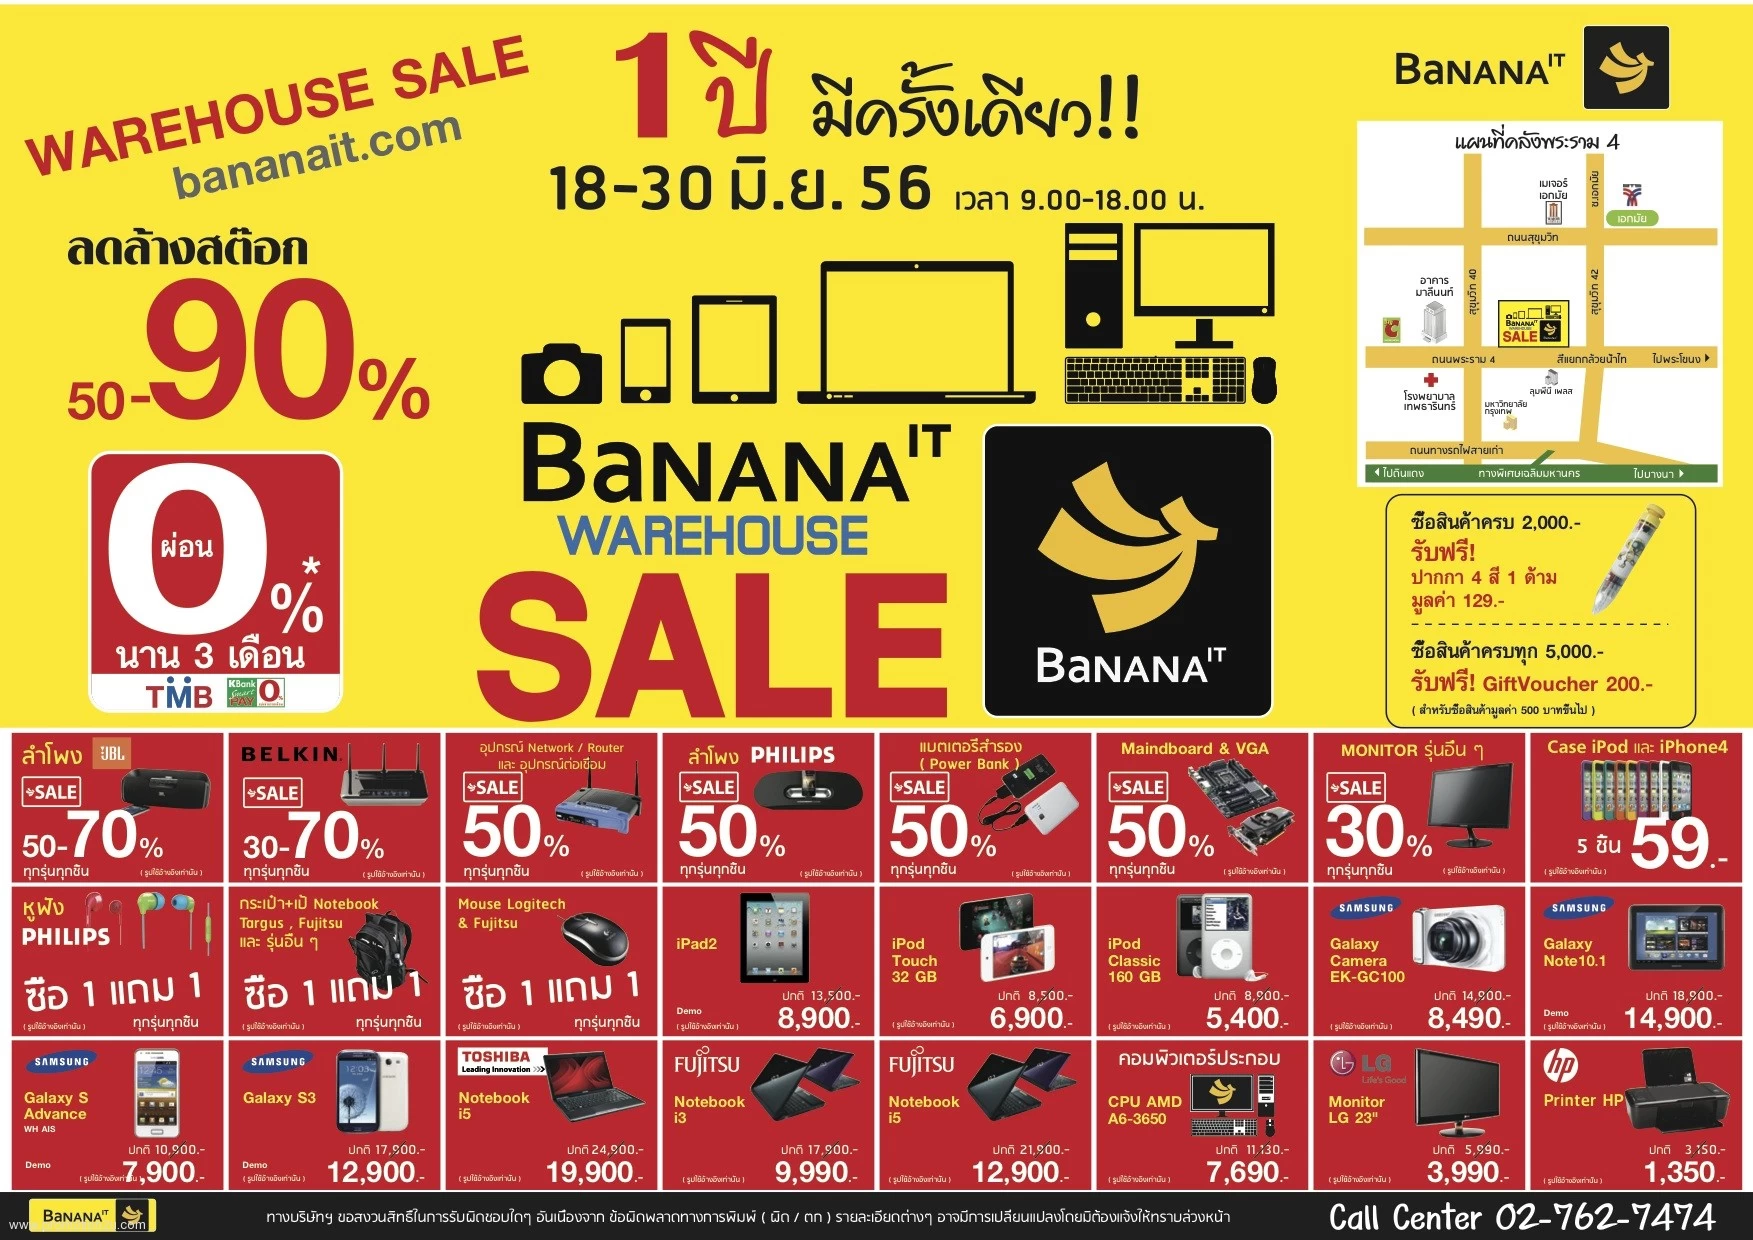 brochure promotion banana it warehouse sale up to 90 off jun 2013 full | Clearance | <!--:TH--></noscript>Promotion จากงาน Banana IT ตั้งแต่ 18-30 มิ.ย.วันนี้เป็นวันแรกกกก ลดกระจุย